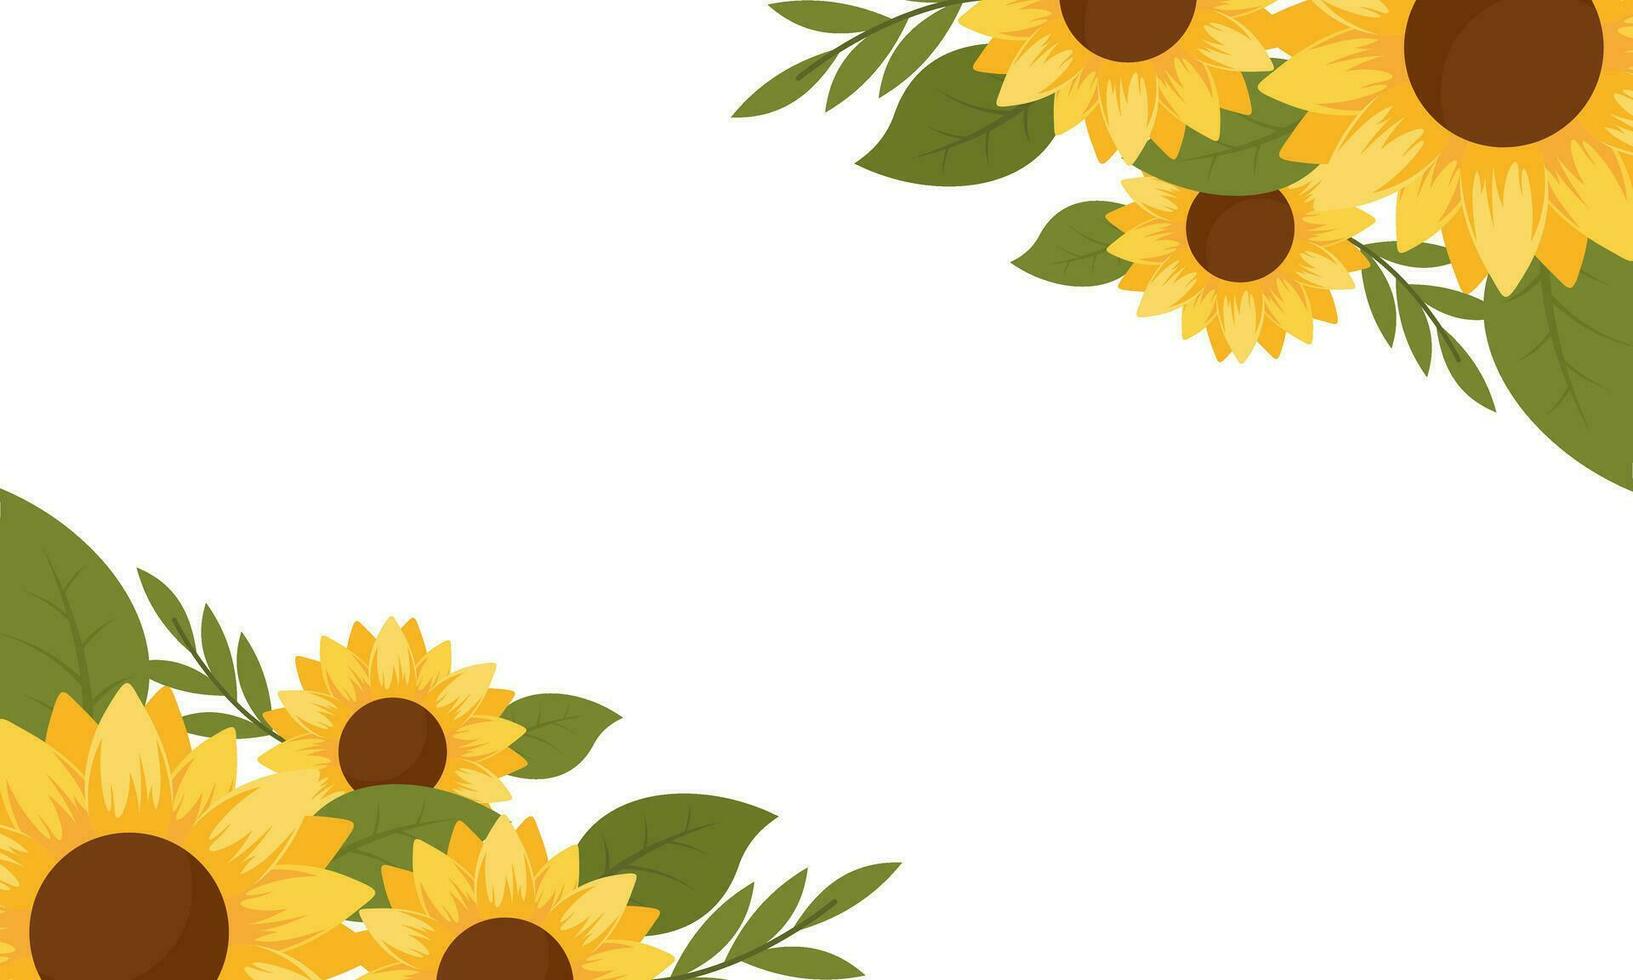 Watercolor sunflower border background vector